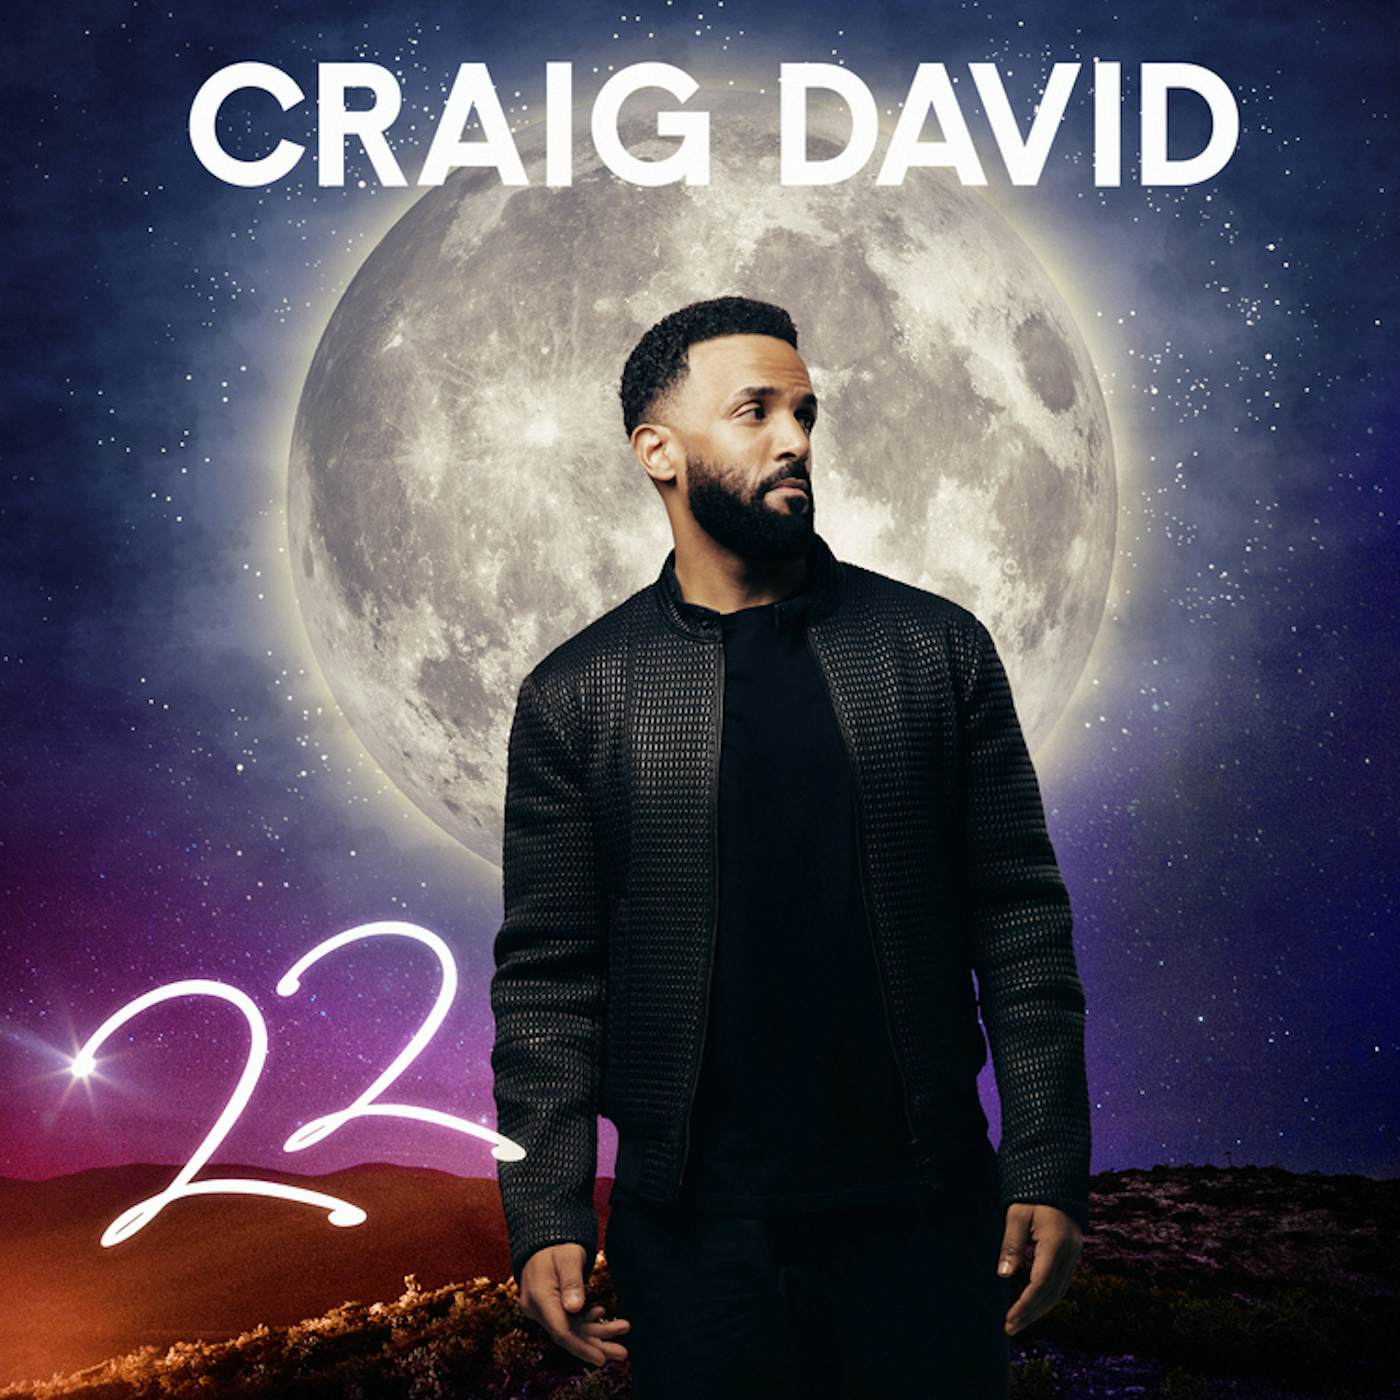 Craig David 22 CD